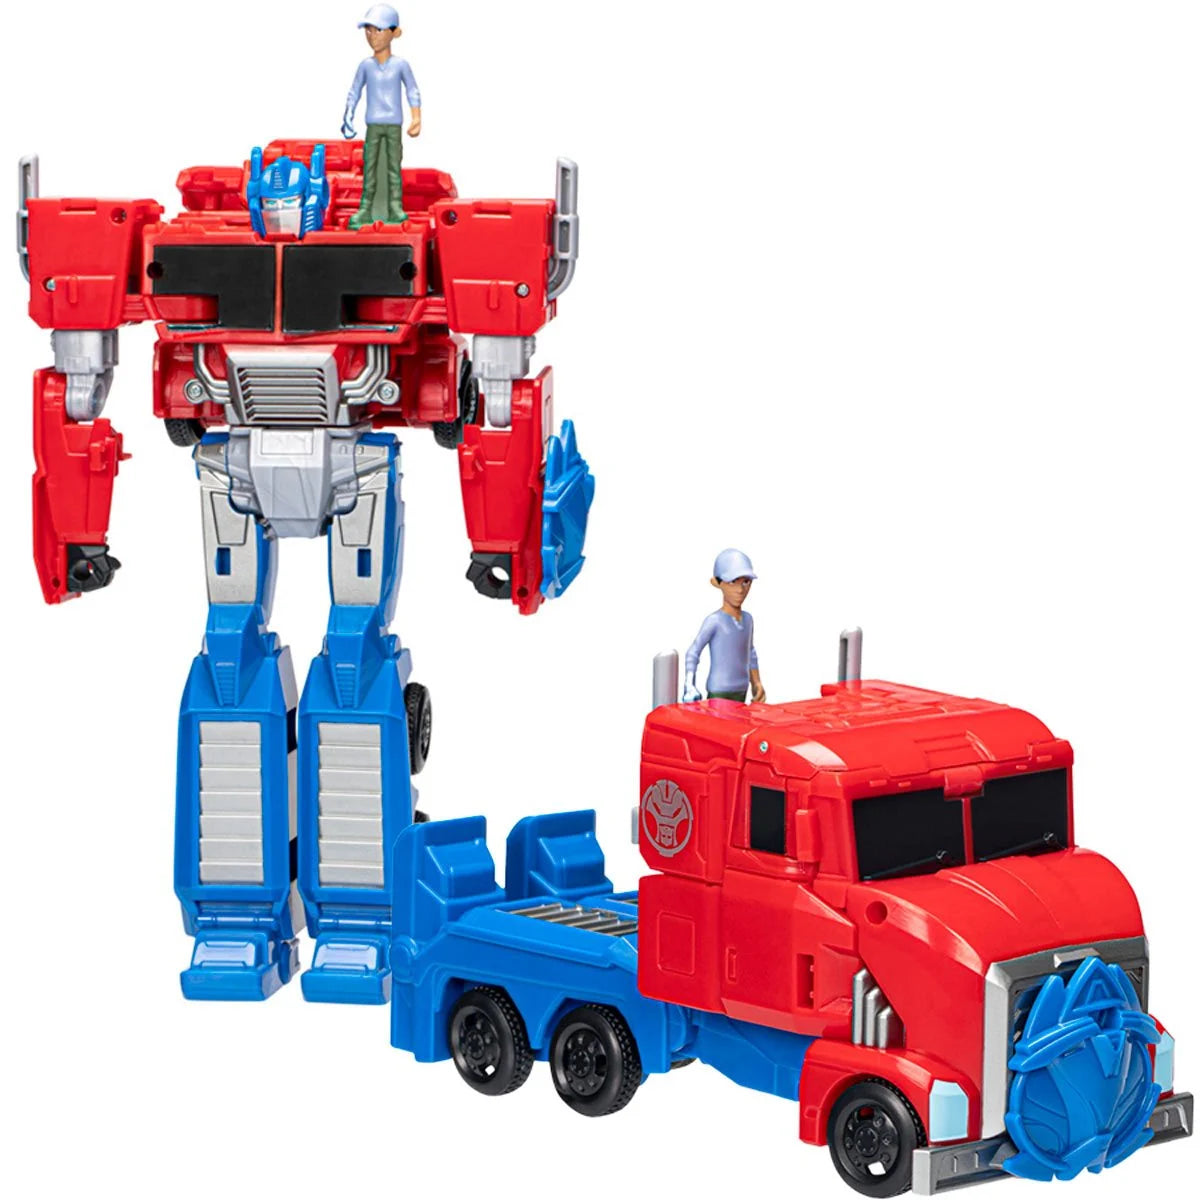 Transformers Earthspark Spinchanger Optimus Prime